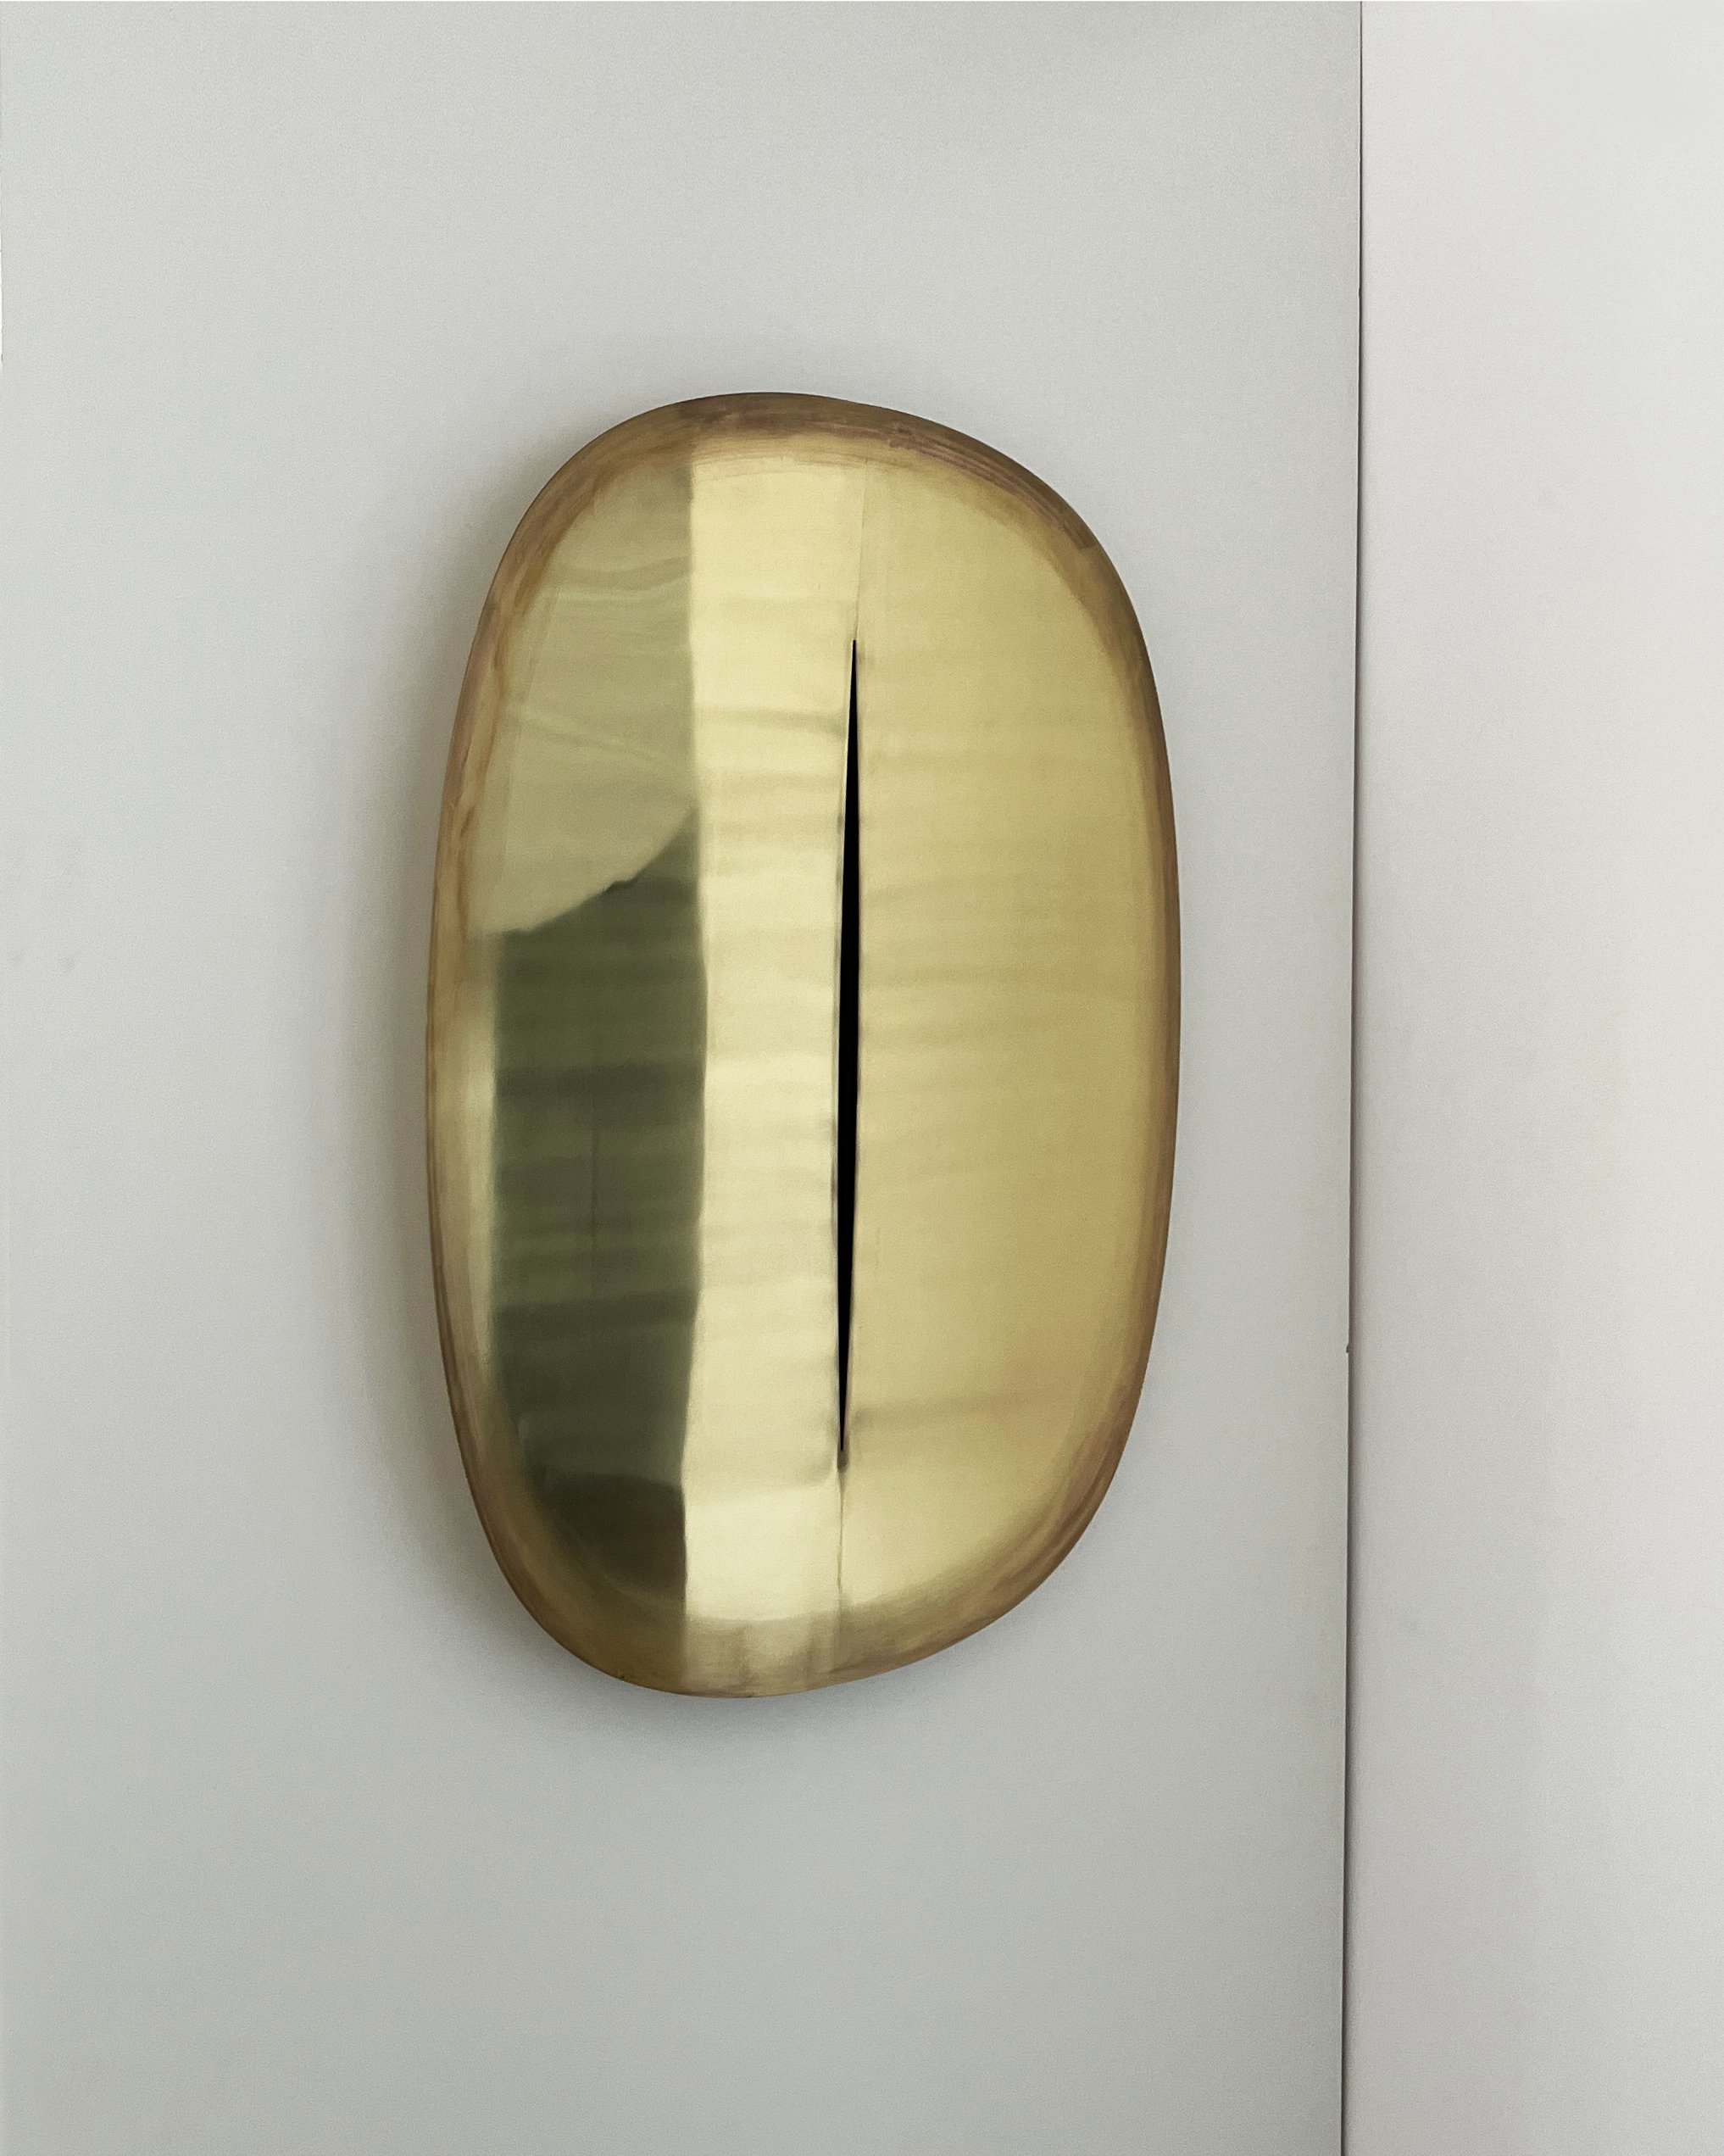 Celine Mirror Patinaed brass hand polished black slit slit mirror Room online Room Furniture Phillip Jividen